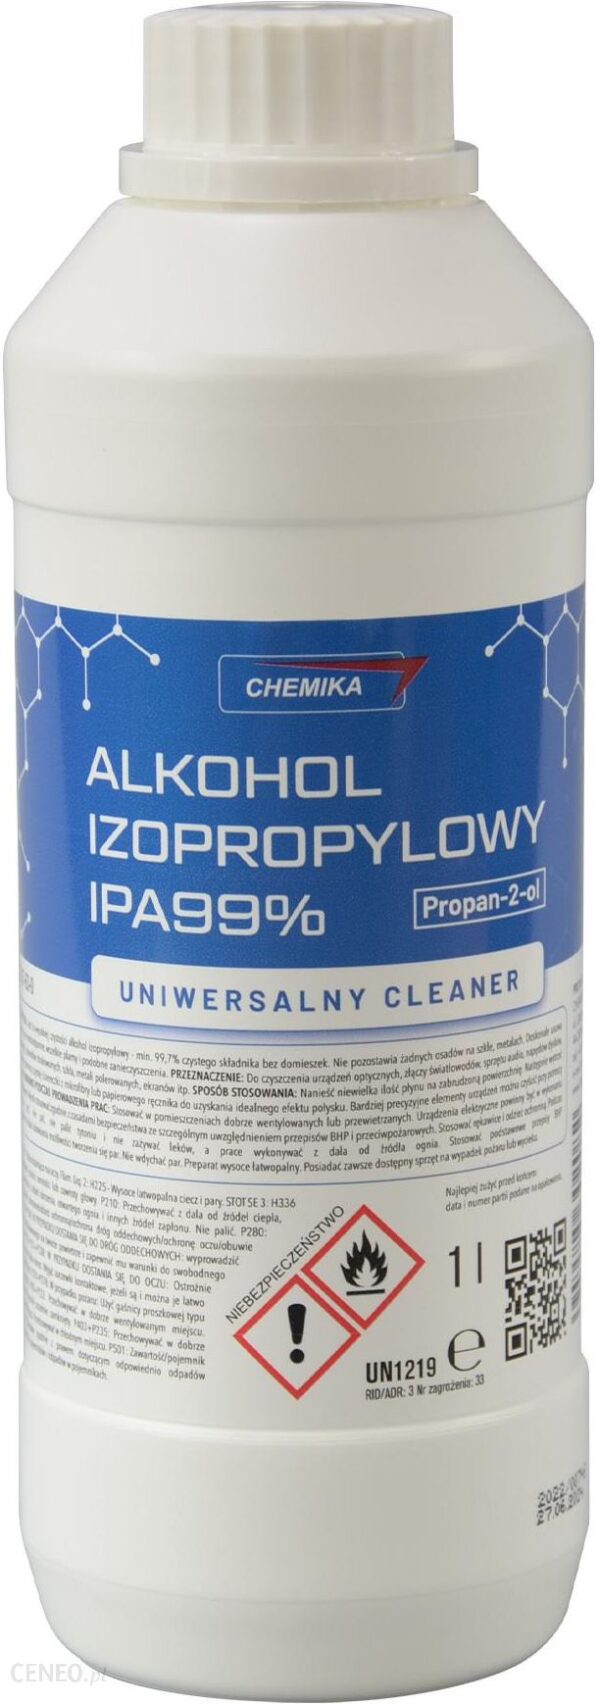 Chemika Alkohol Izopropylowy IPA cleaner 99% 1L